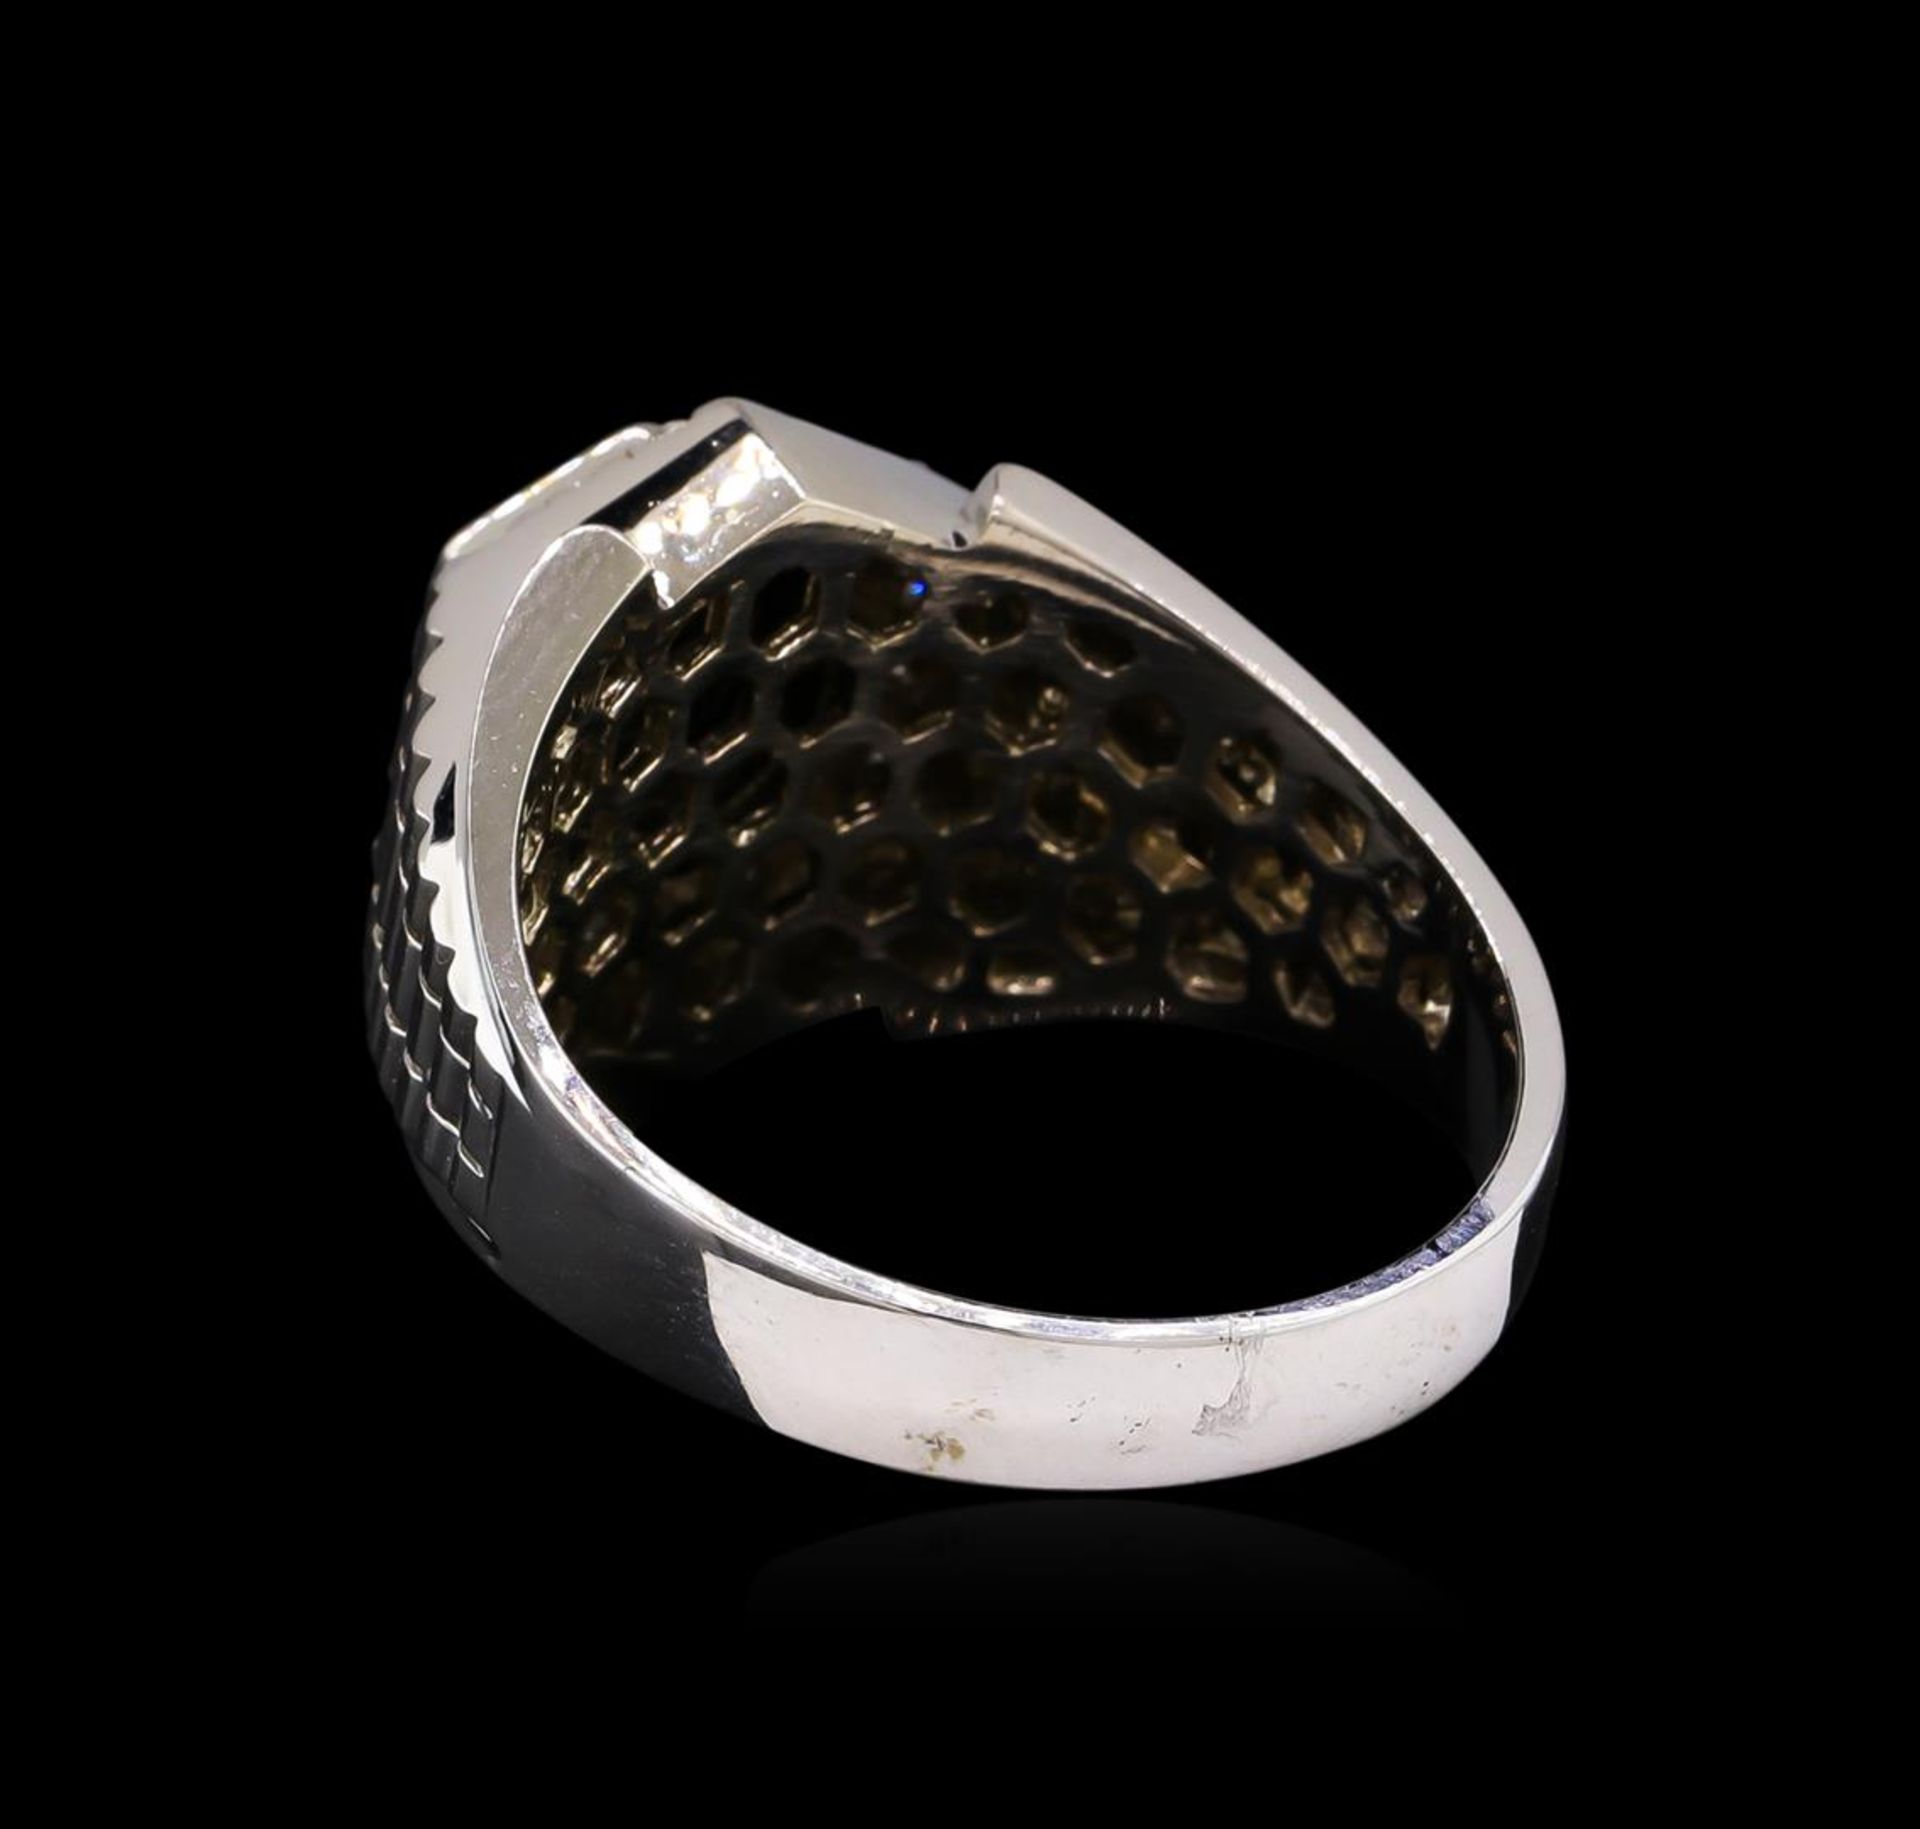 2.55 ctw Black Diamond Ring - 14KT White Gold - Image 3 of 4